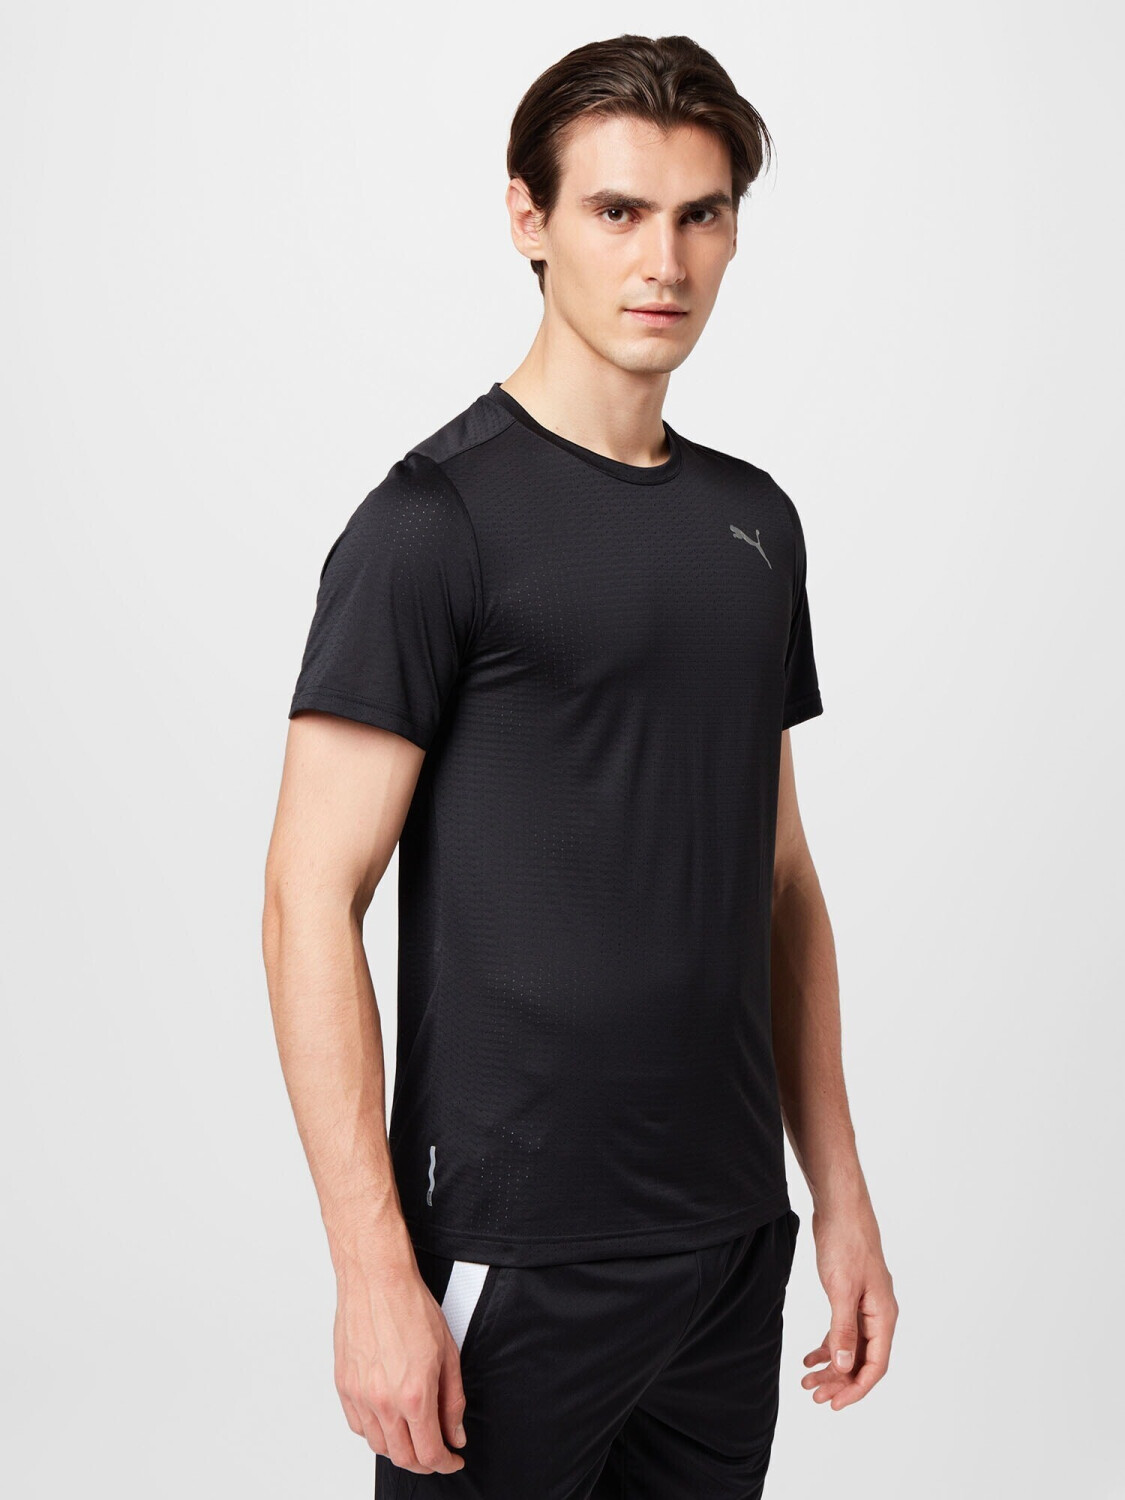 Puma Favourite Blaster Trainingsshirt black (522351-1) ab € 15,27 |  Preisvergleich bei